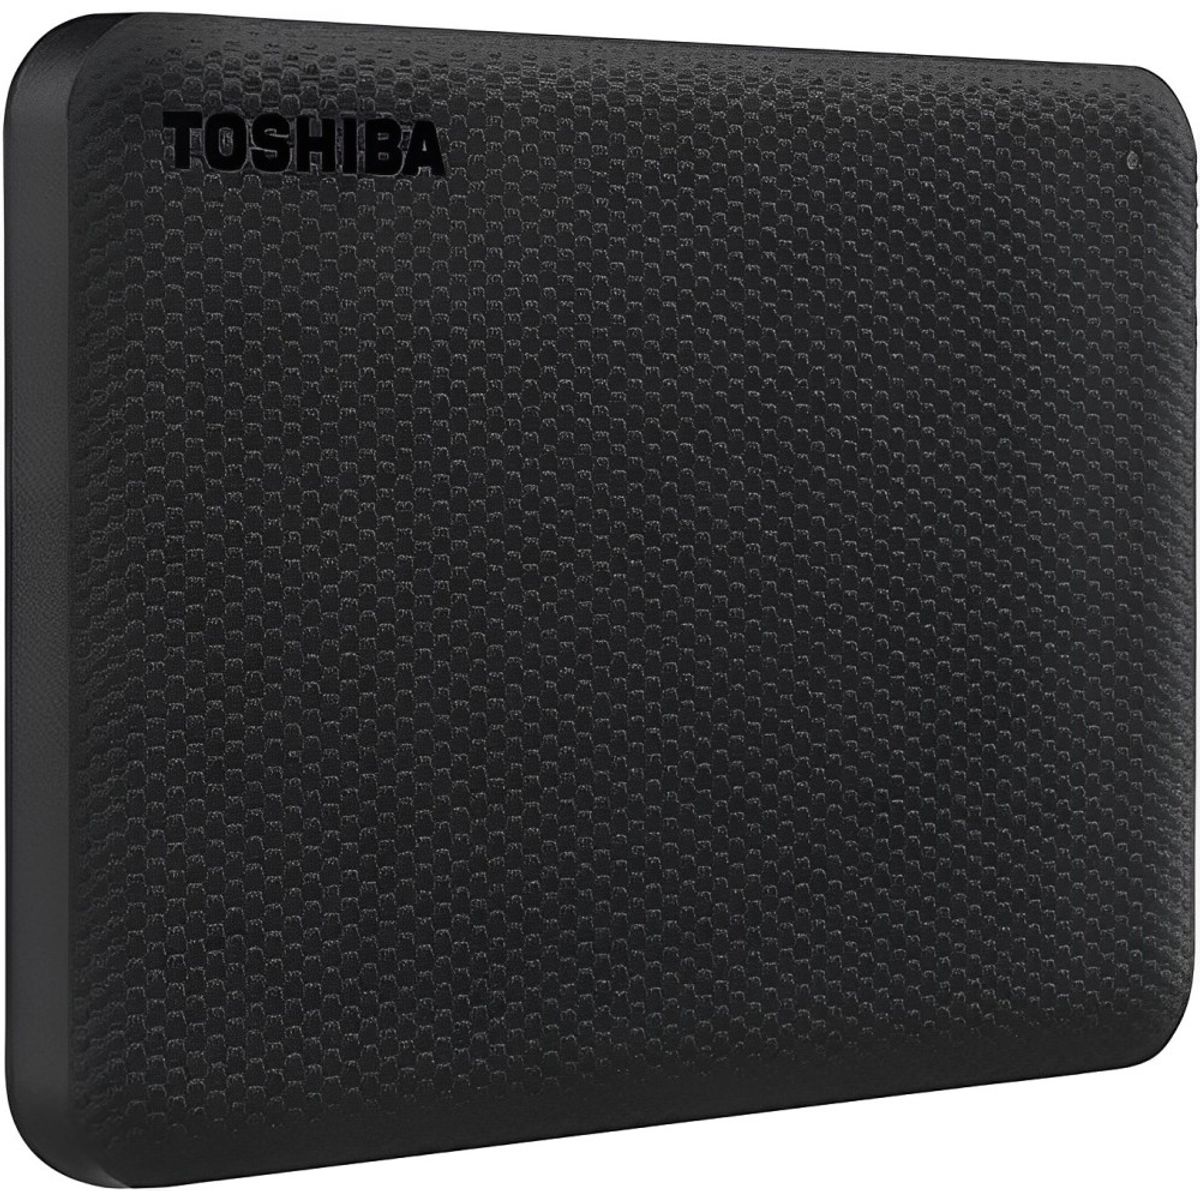 HD Externo Portátil Toshiba 4TB, Canvio Advance, USB 3.0, Preto - HDTCA40XK3CA